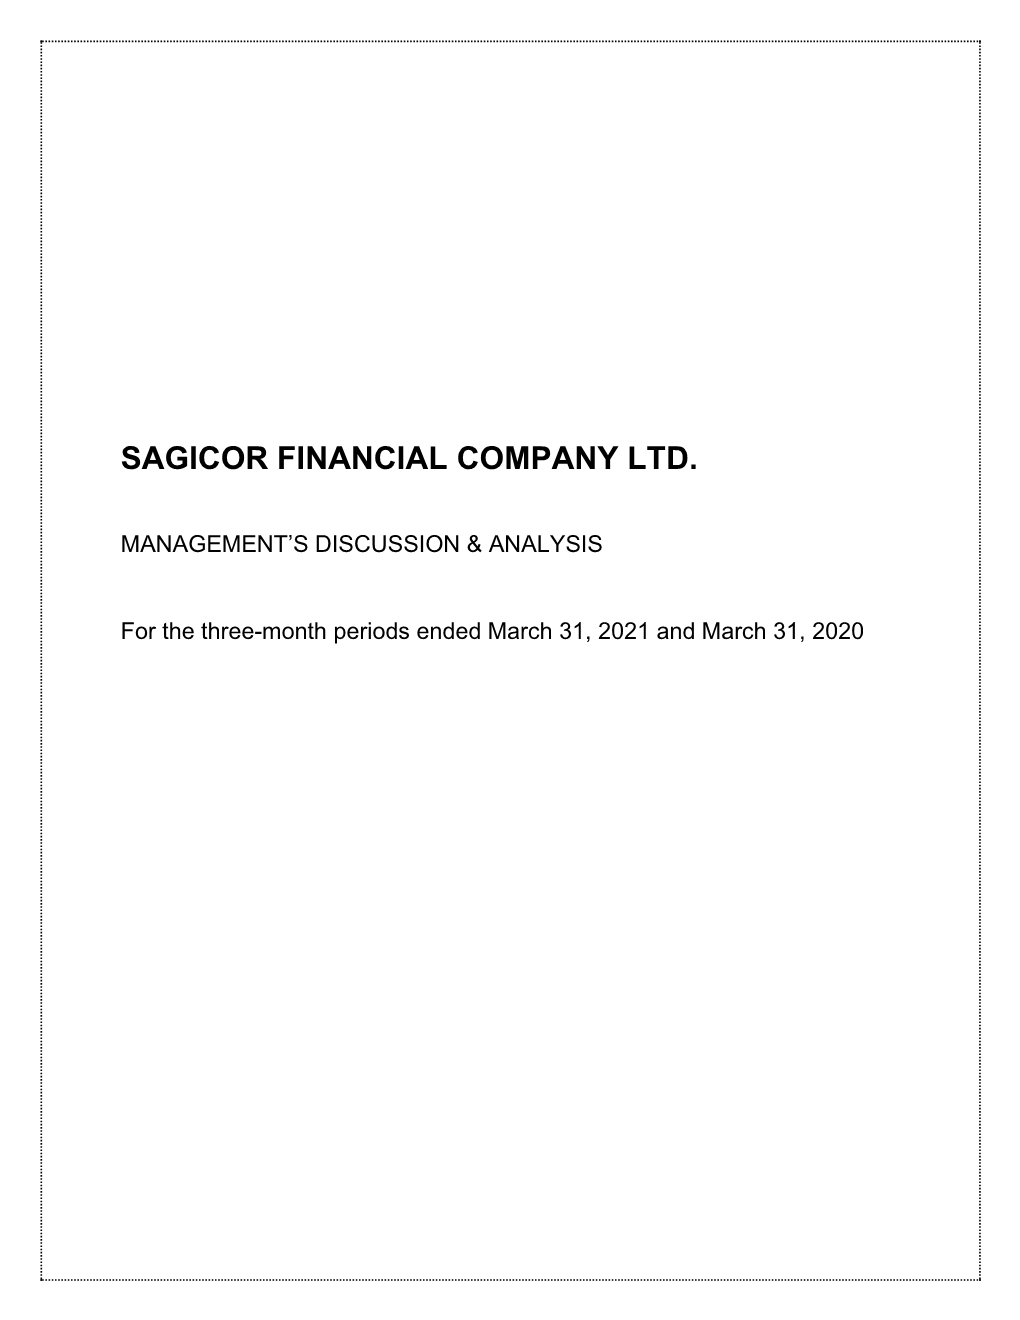 Sagicor Financial Company Ltd